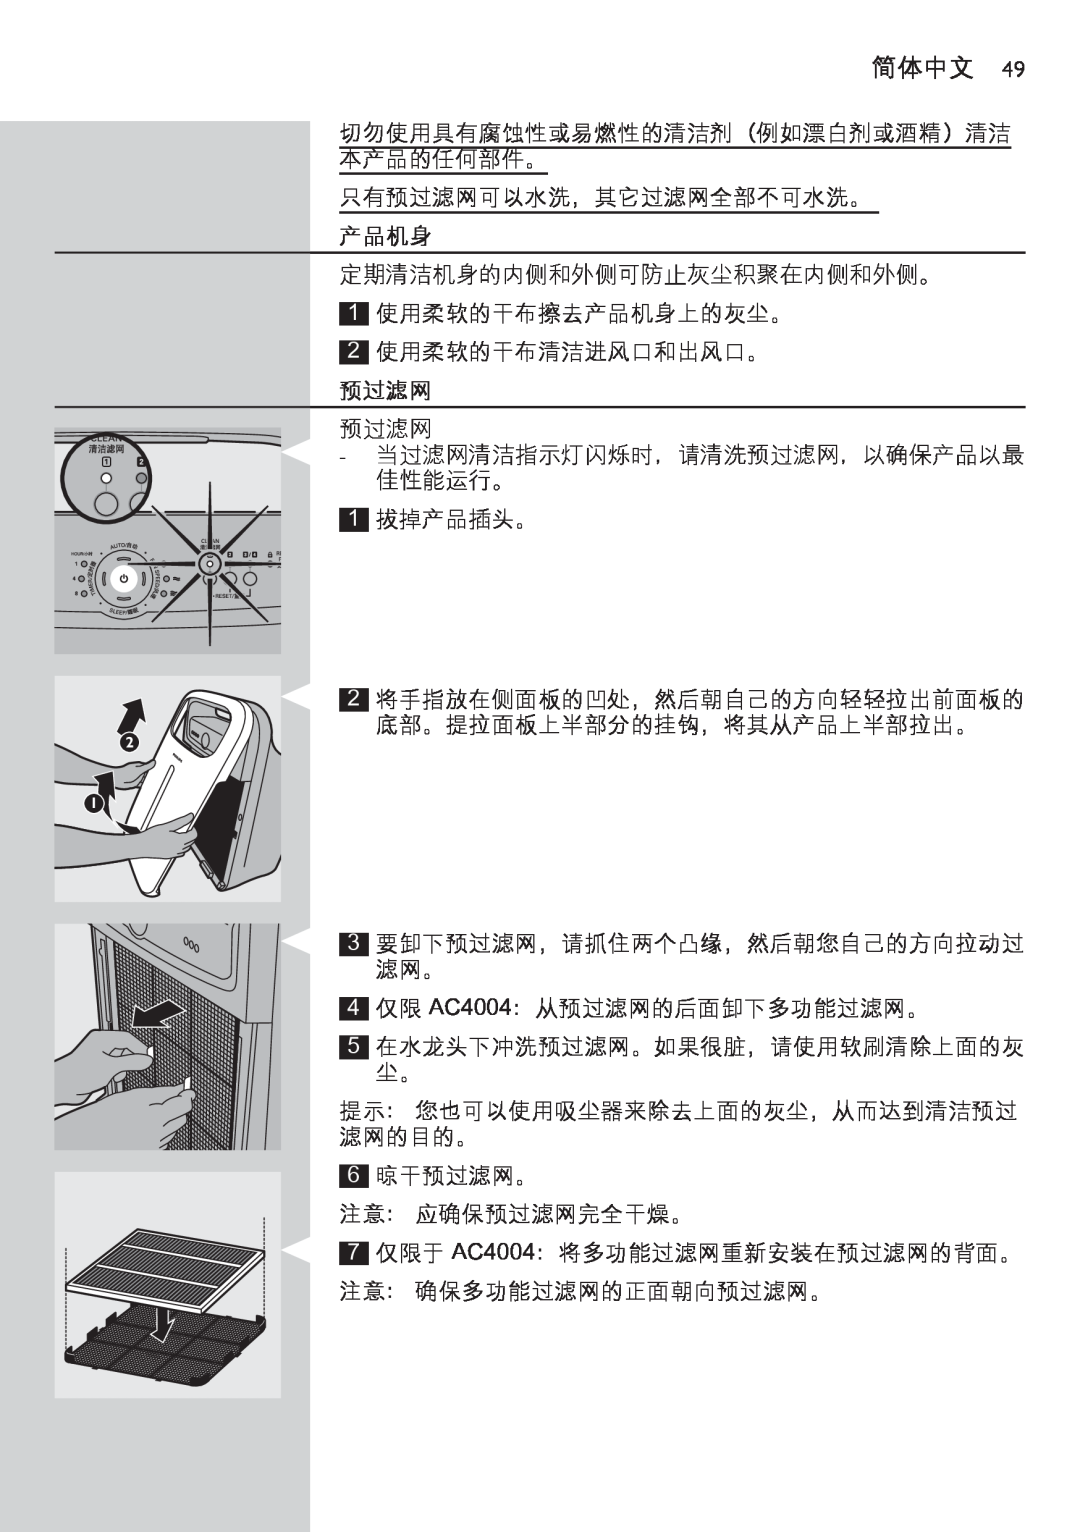 Philips AC4002 manual 产品机身, 预过滤网, 简体中文 